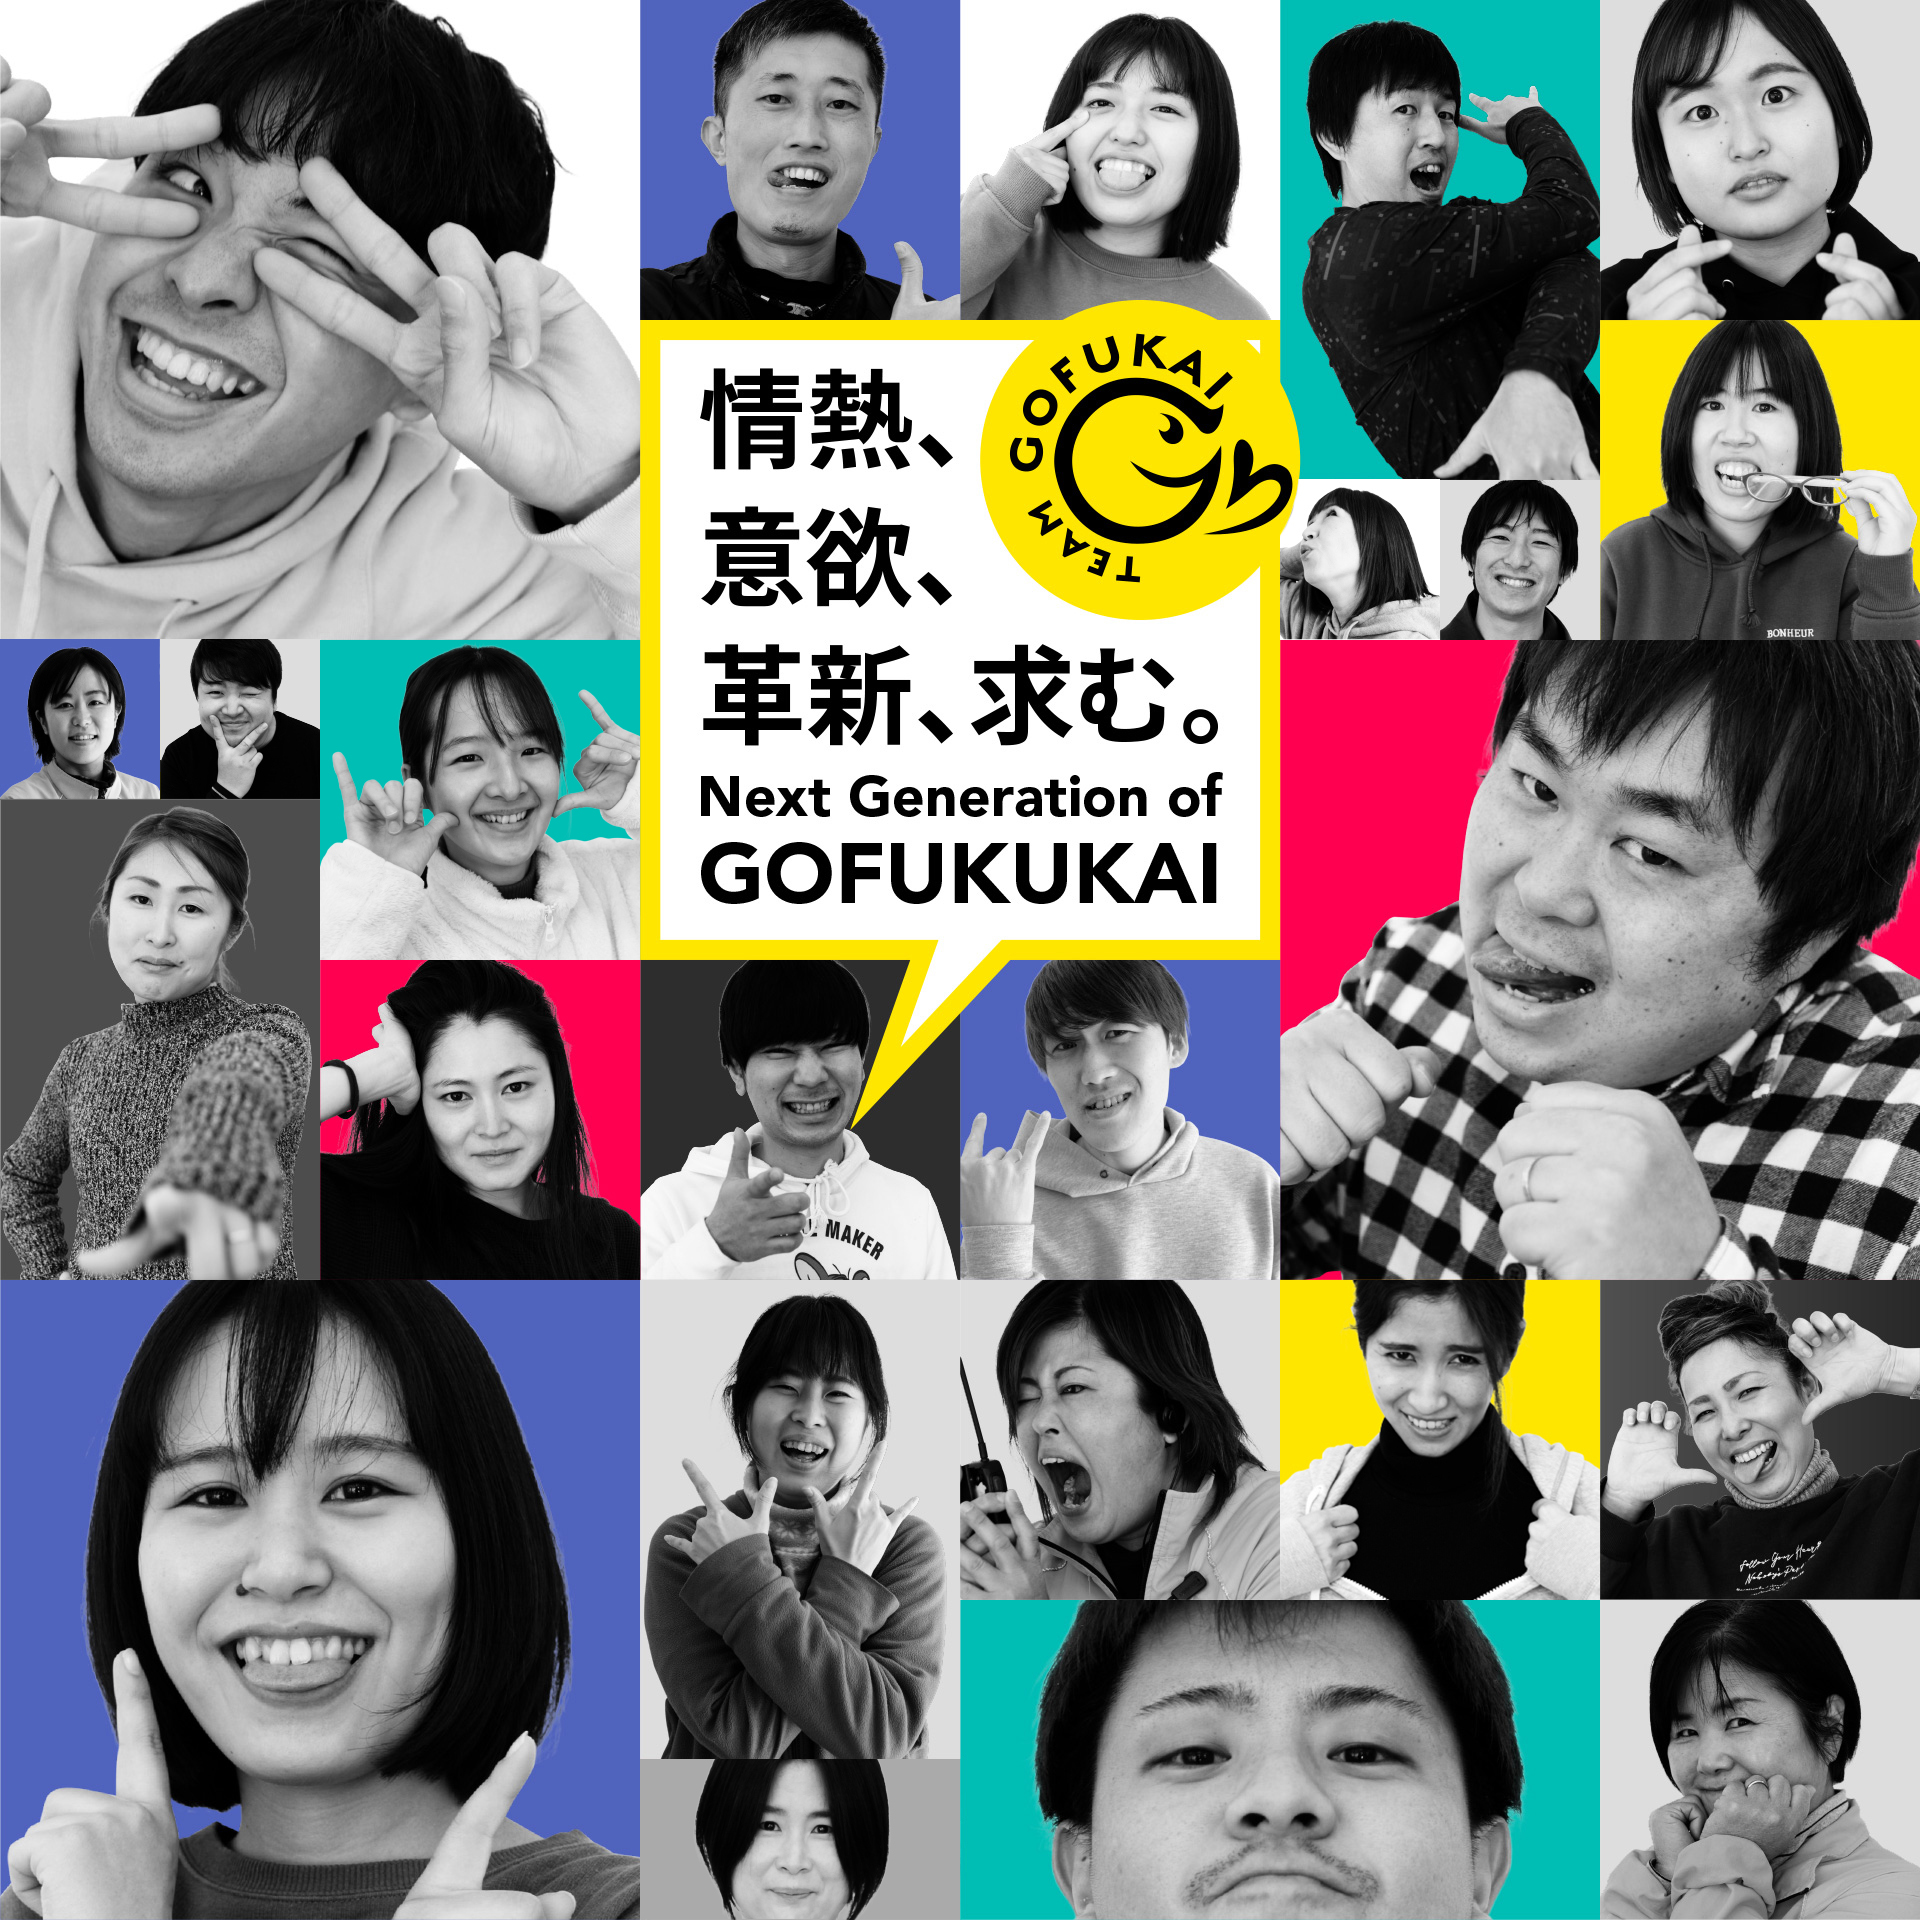 Next Generation of GOFUKUKAI